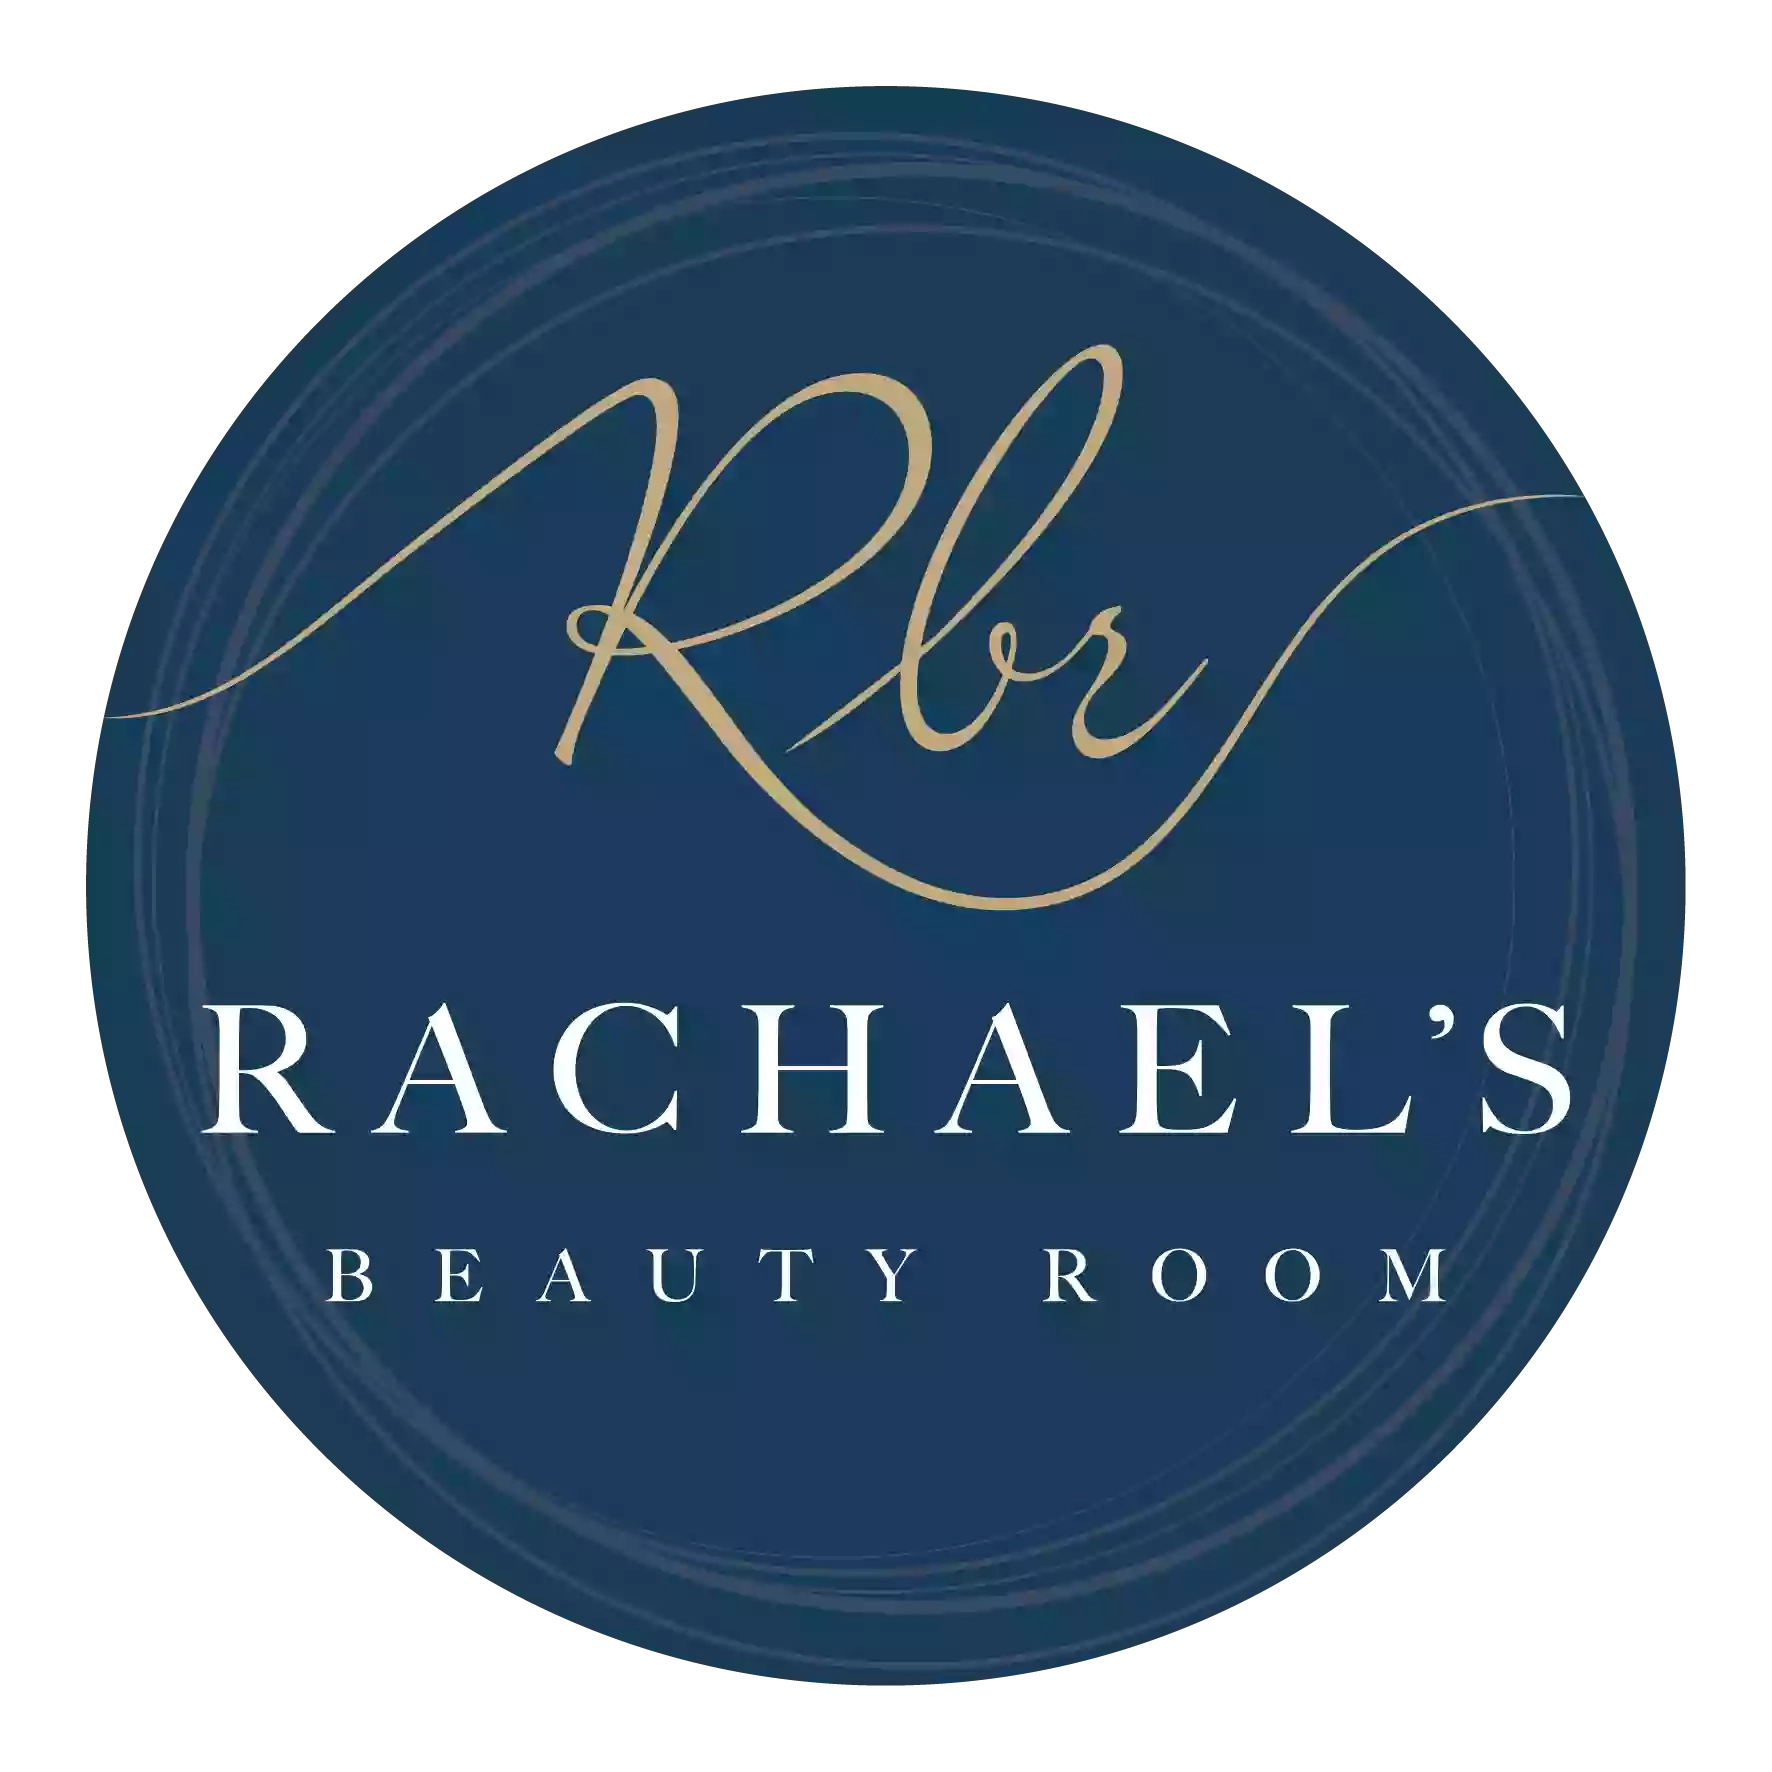 Rachael's Beauty Room Ltd